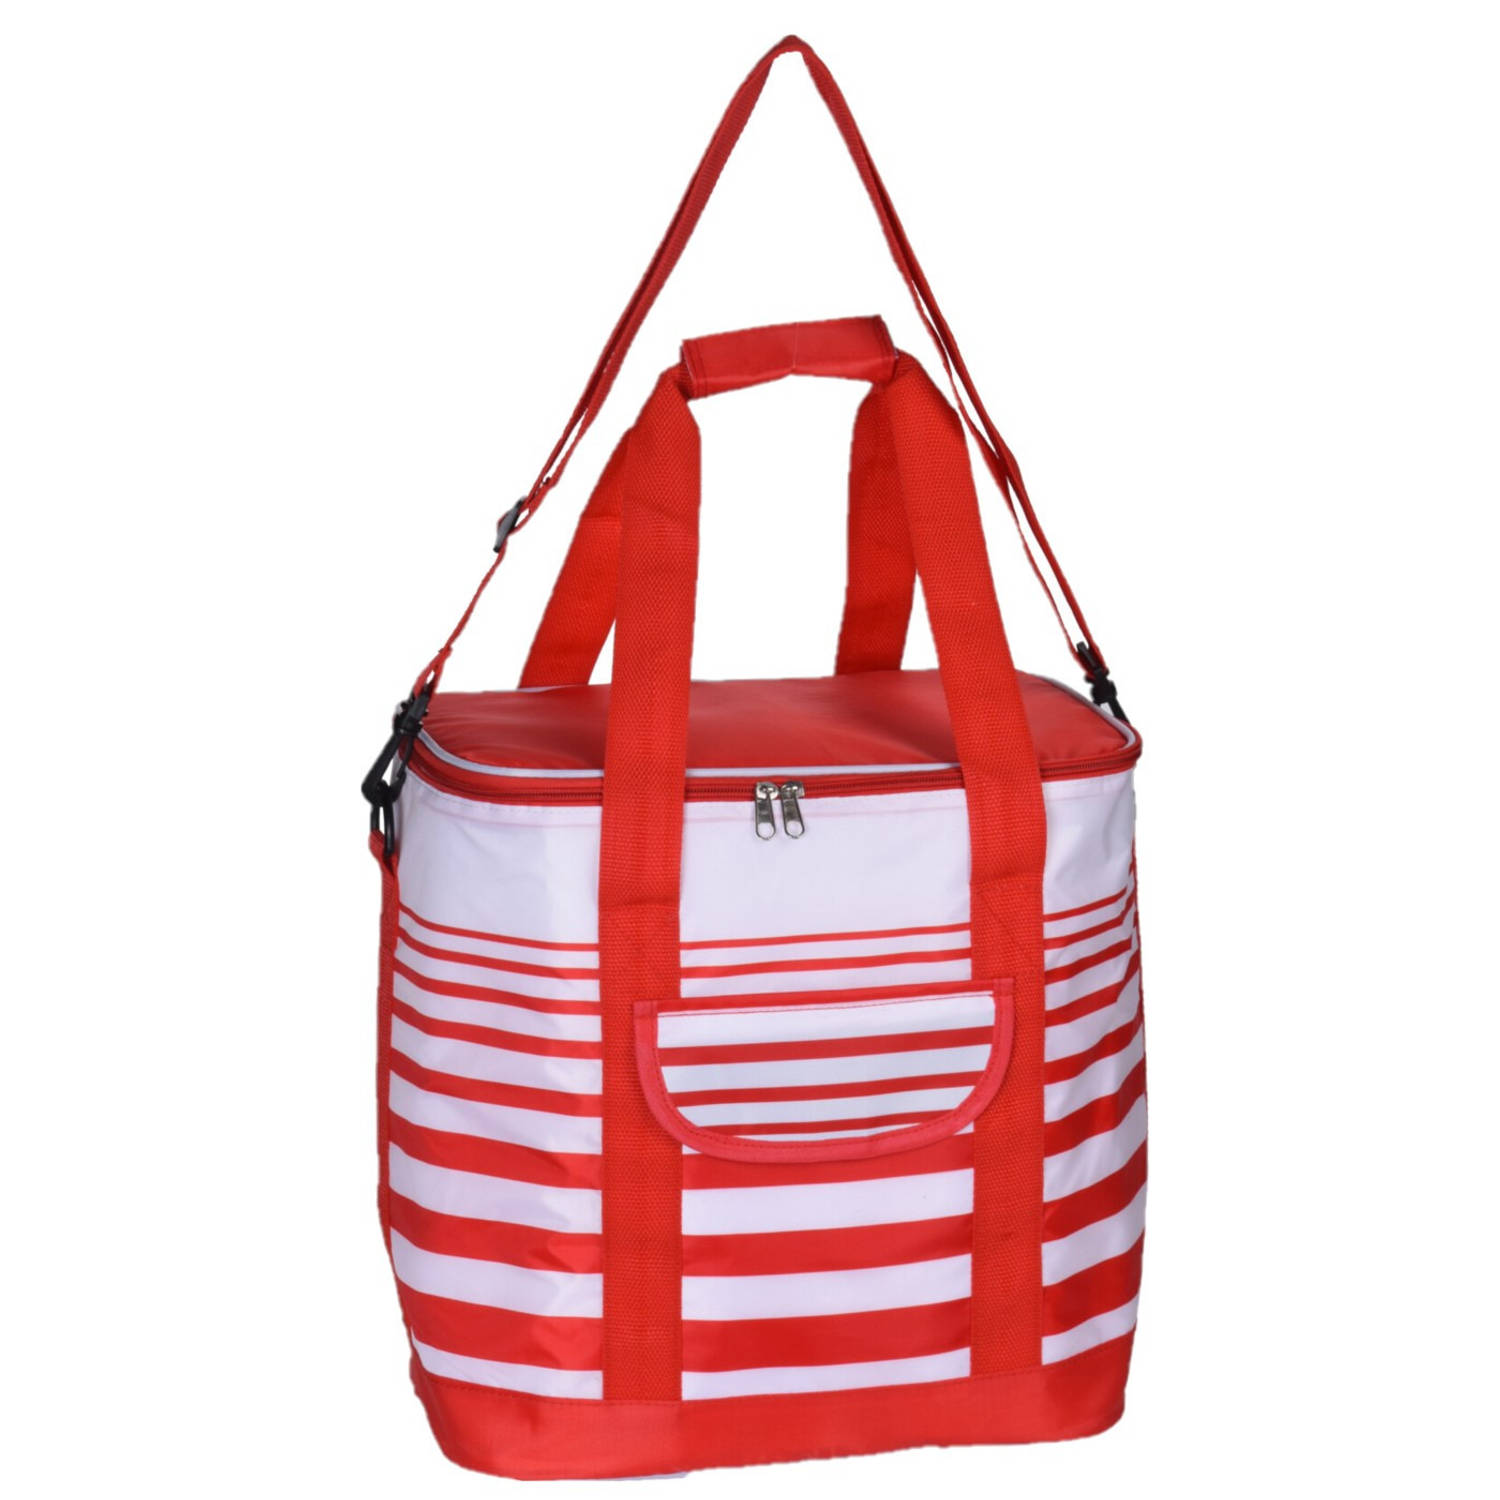 Grote koeltas draagtas schoudertas rood/wit gestreept 33 x 23 x 36 cm 24 liter - Koeltas